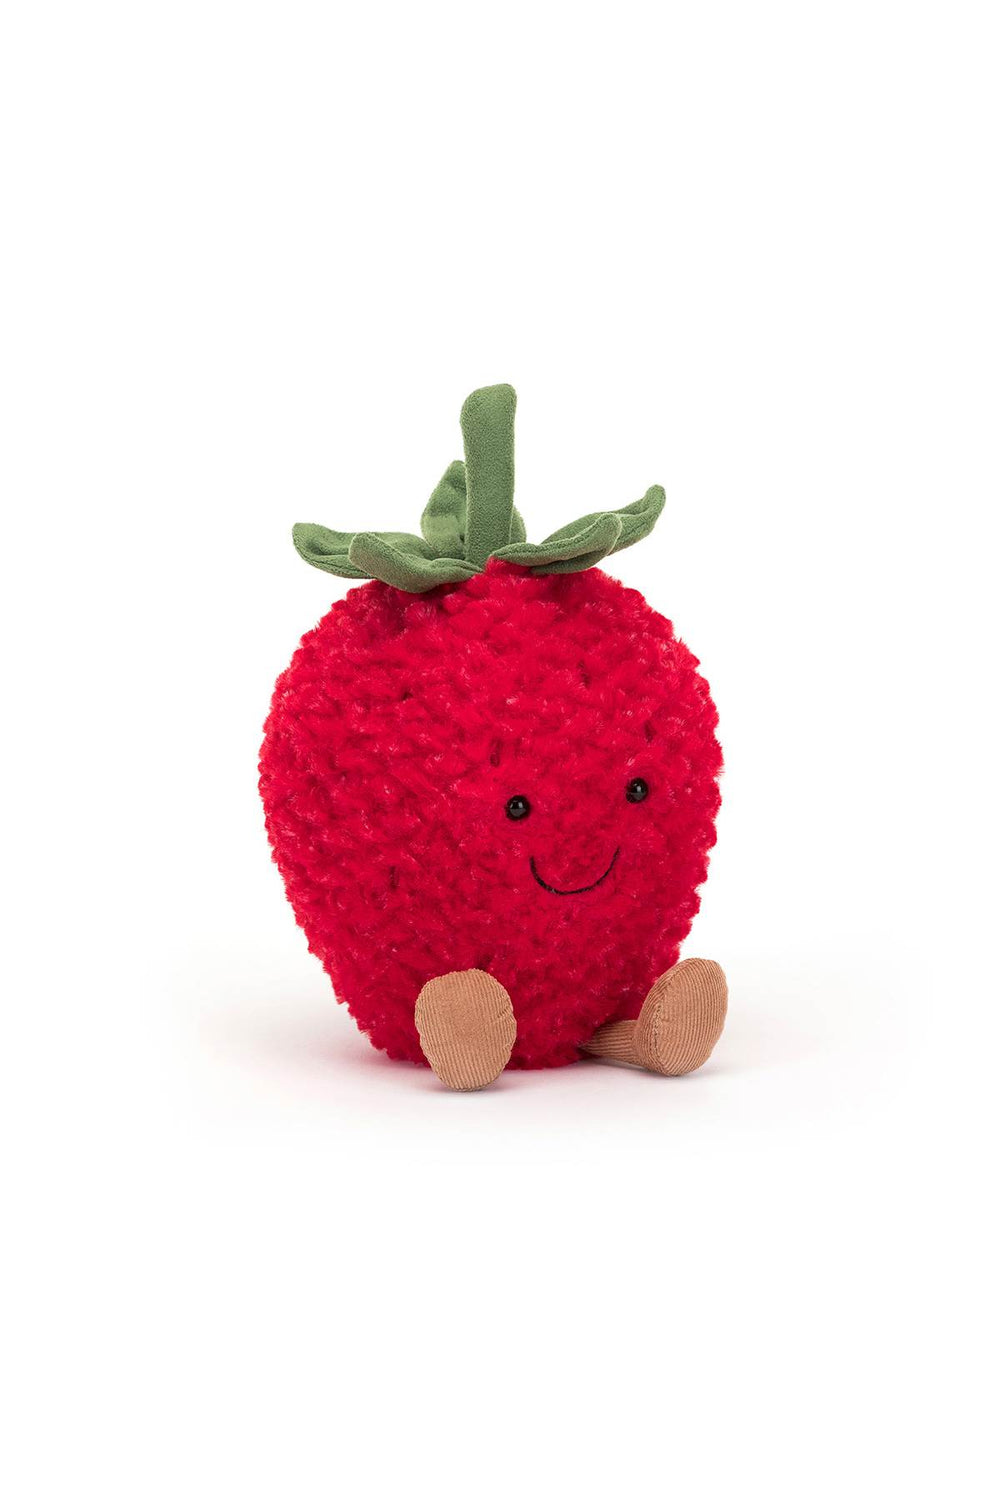 "strawberry-1